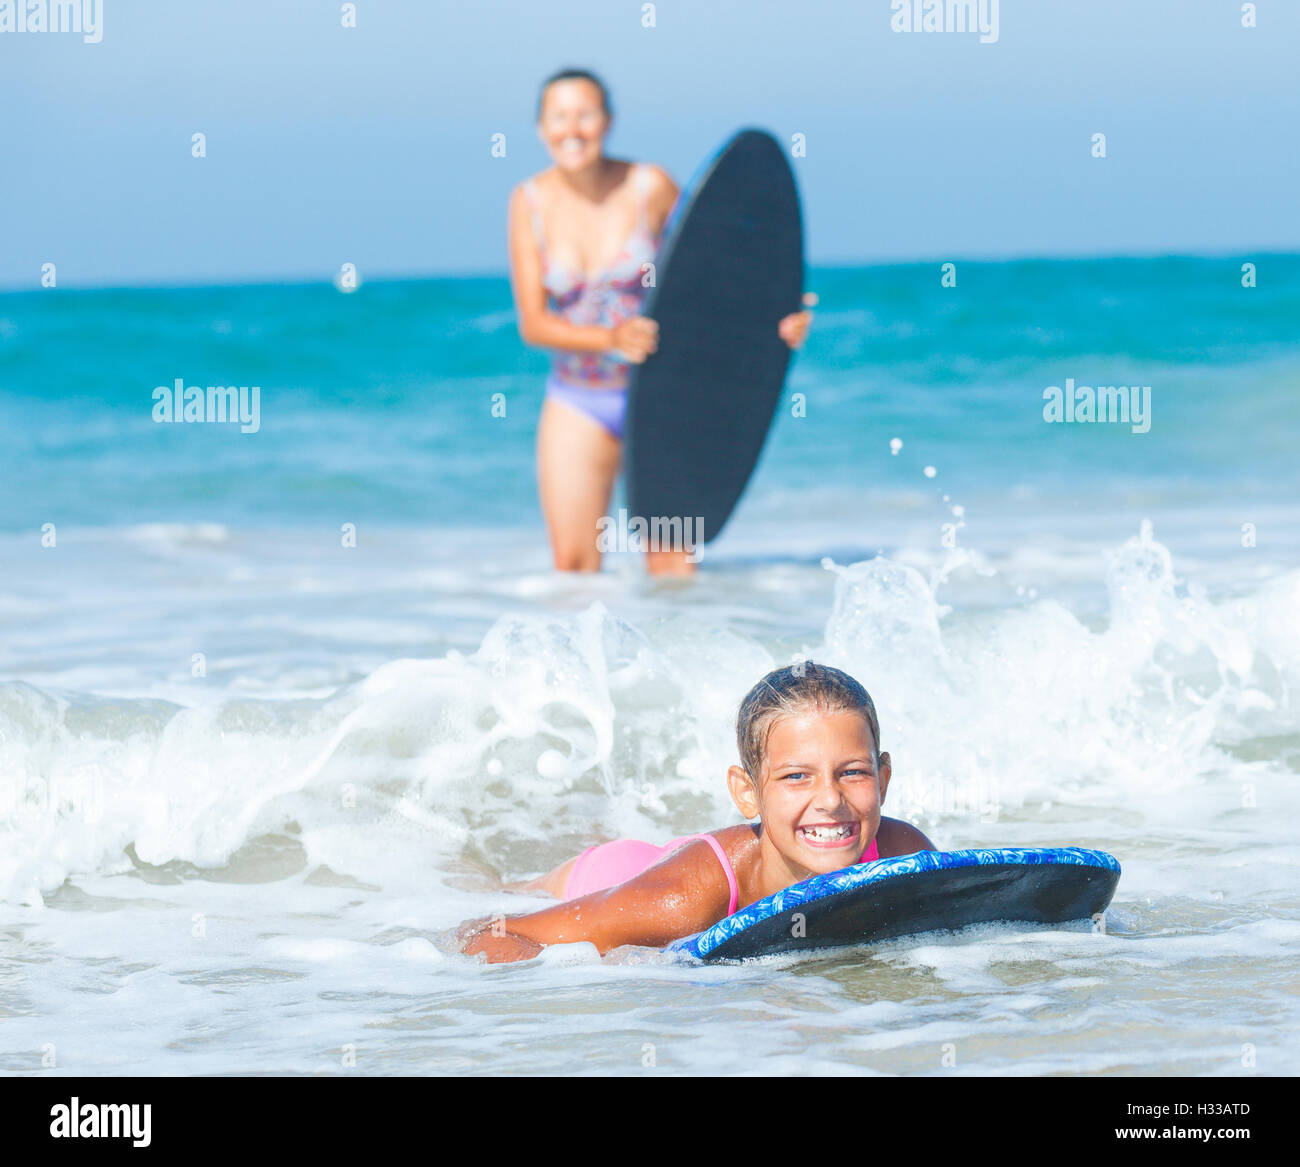 Summer vacation - surfer girl. Stock Photo